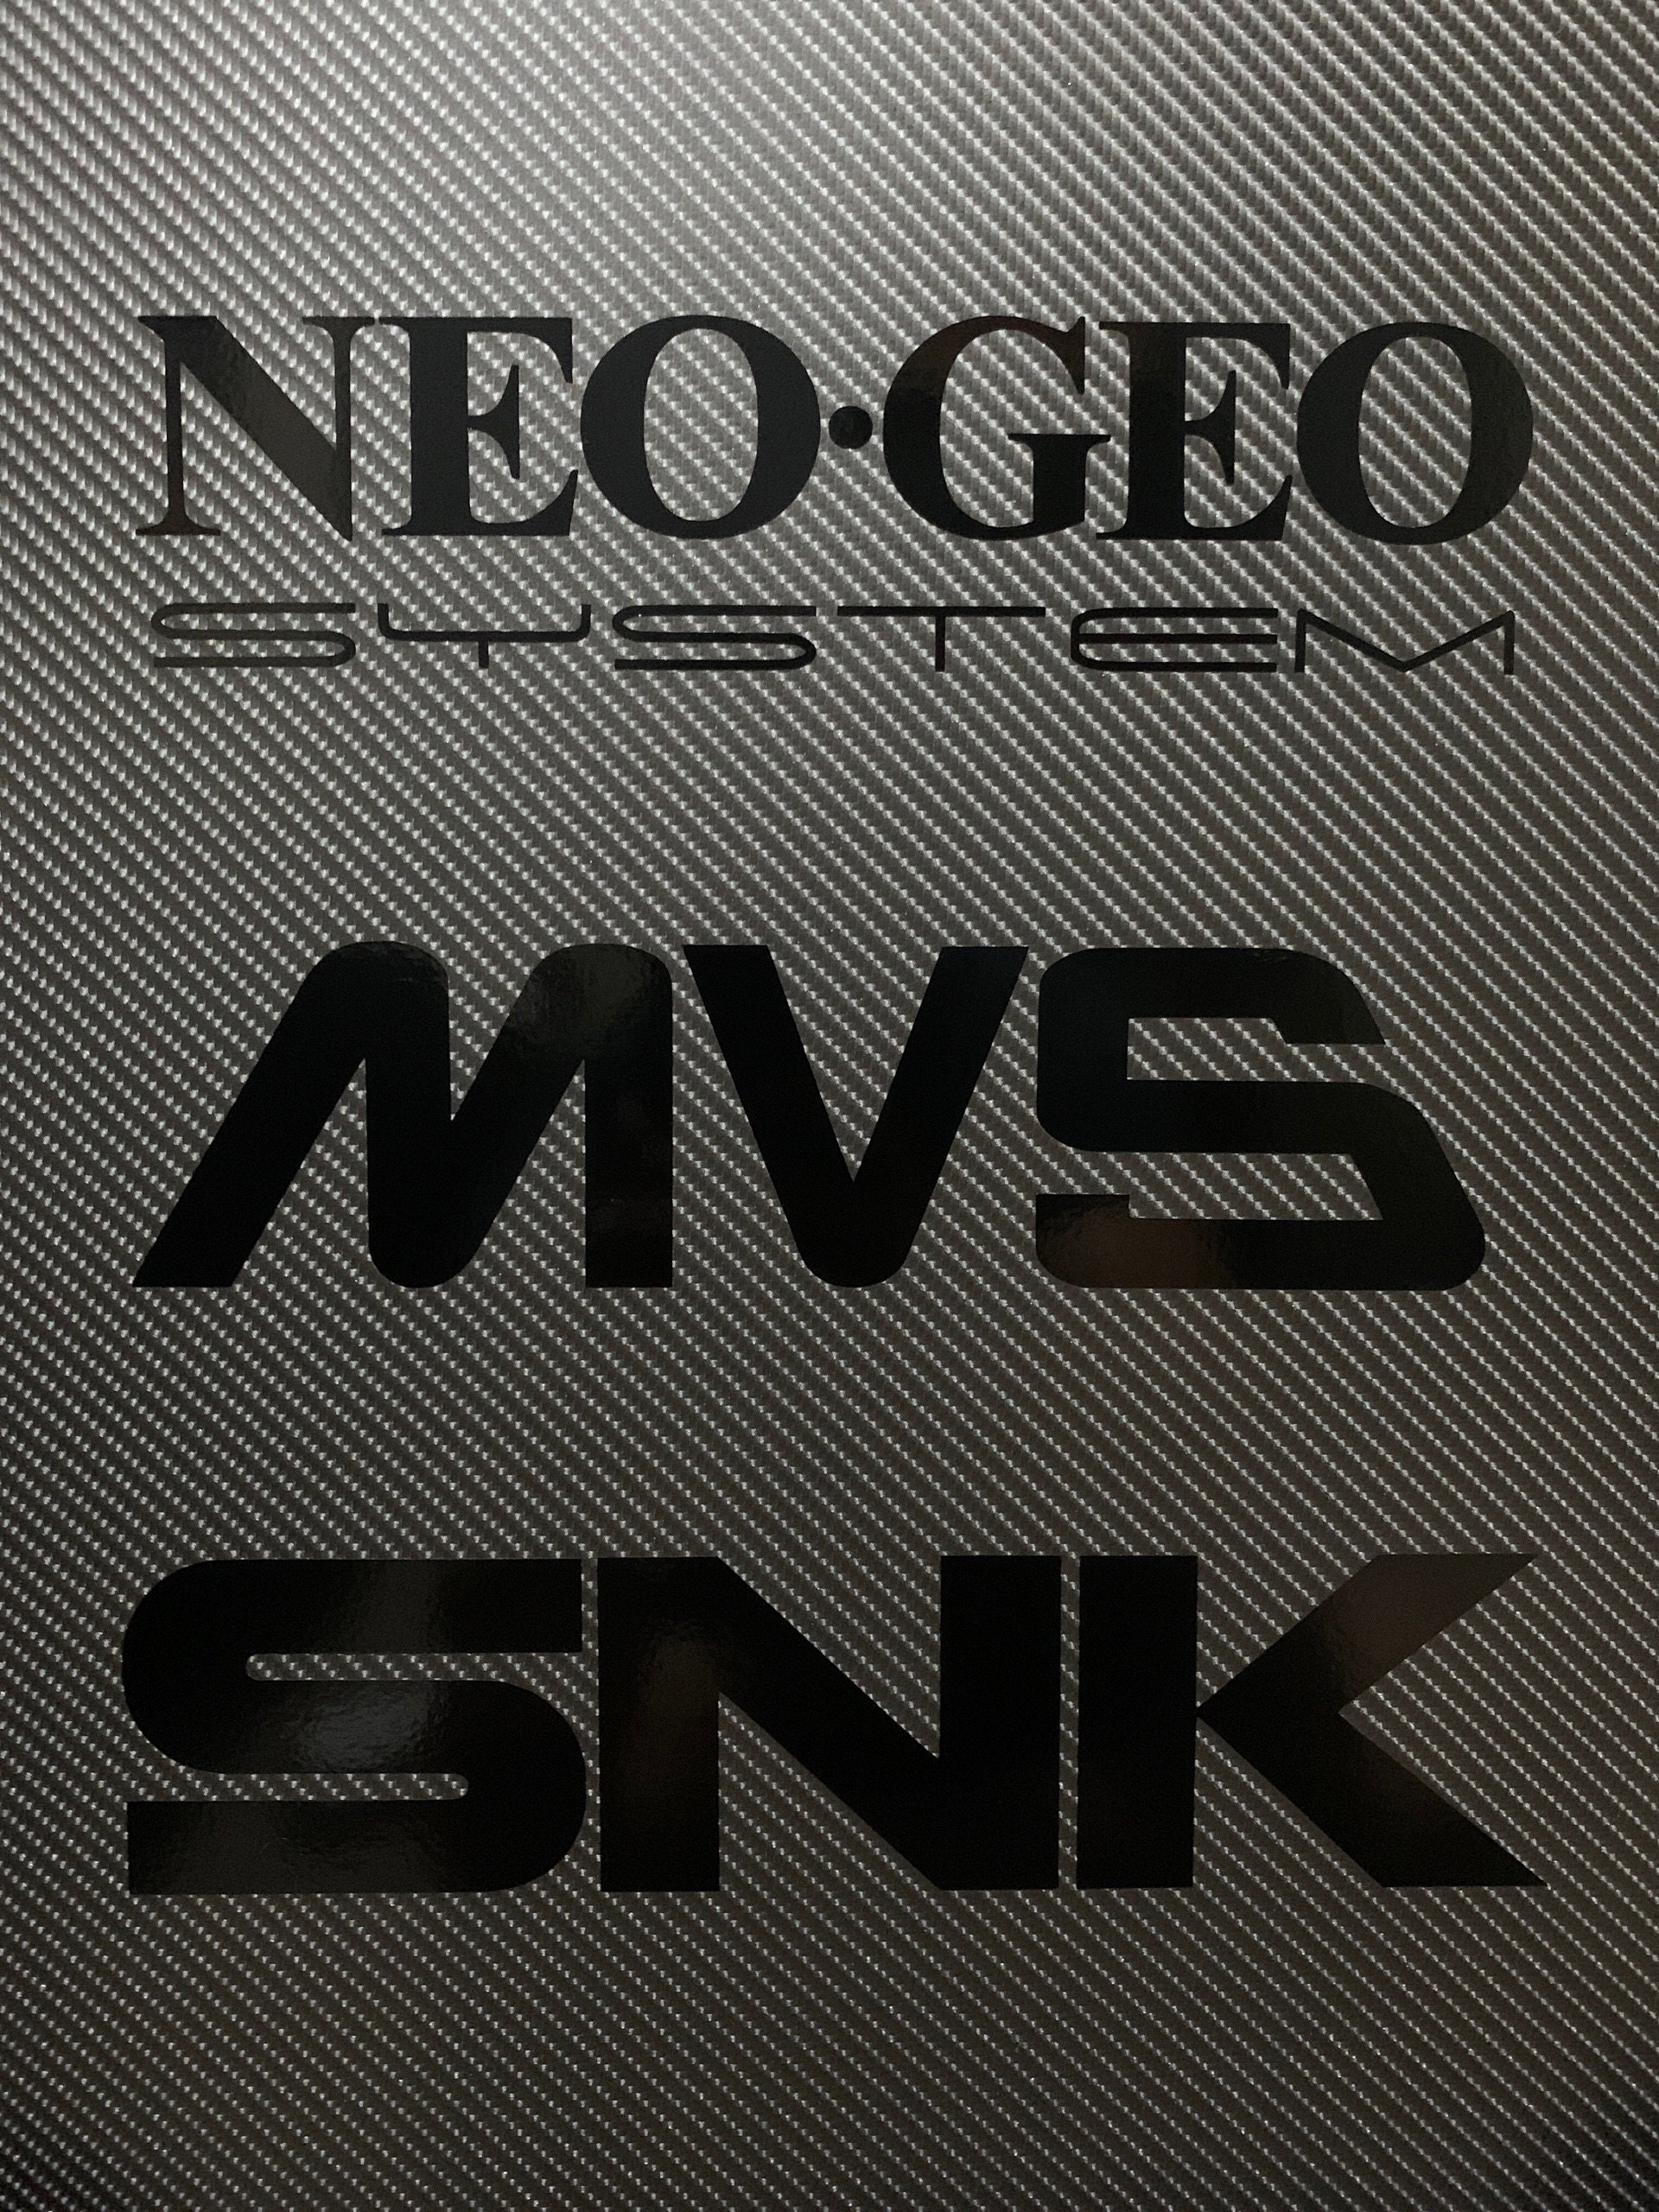 Arcade style Vinyl Decal Stickers NeoGeo MVS SNK Multi pack Read description * 